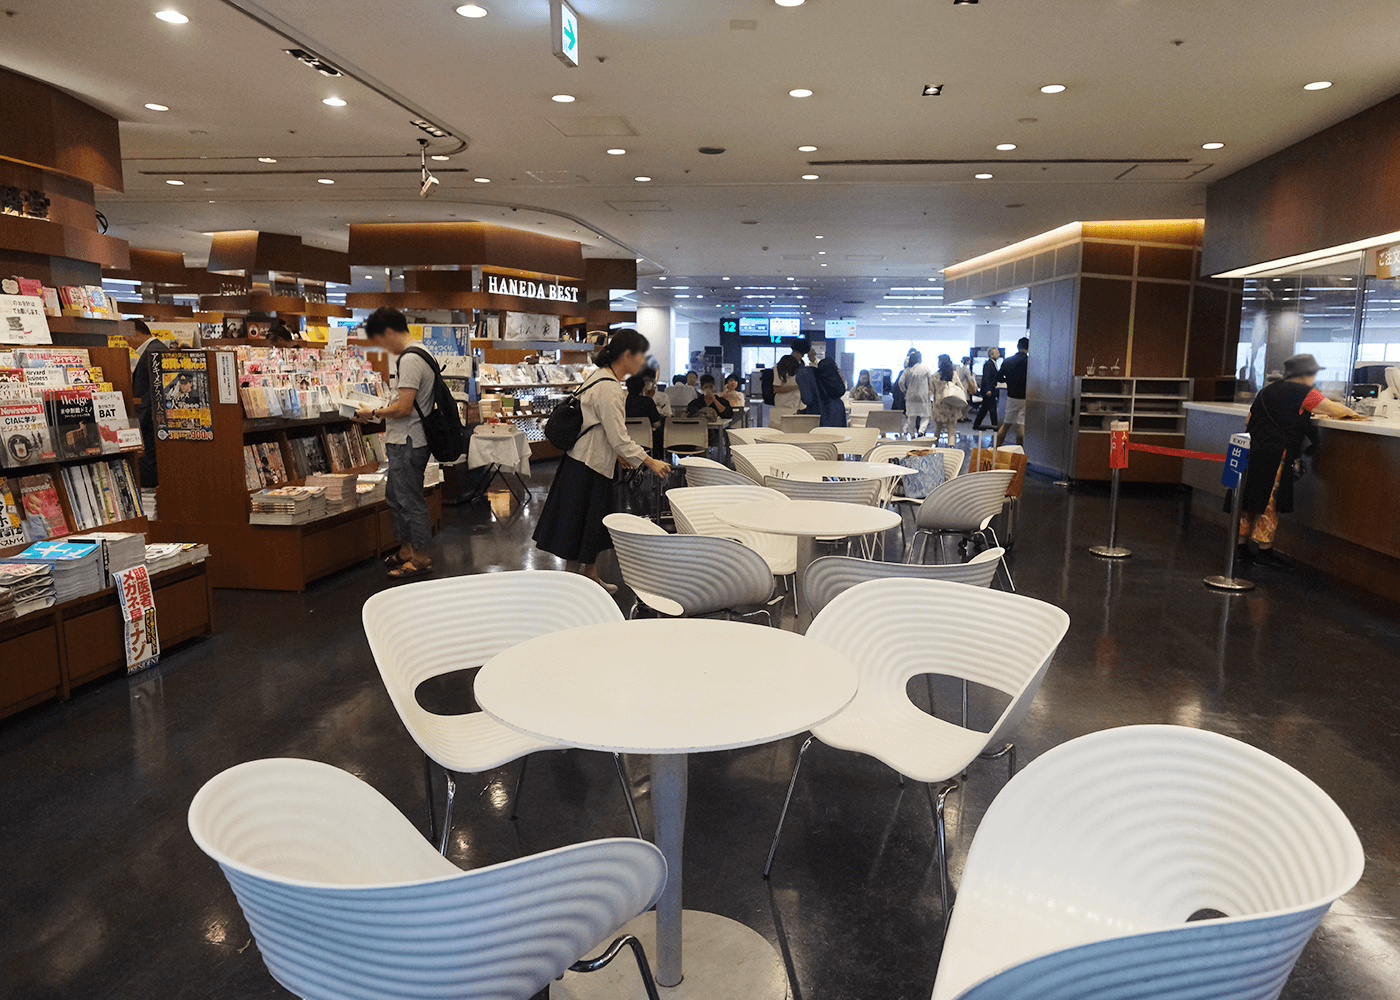 Japan Gourmet Port（ジャパングルメポート）@羽田空港第1ターミナル